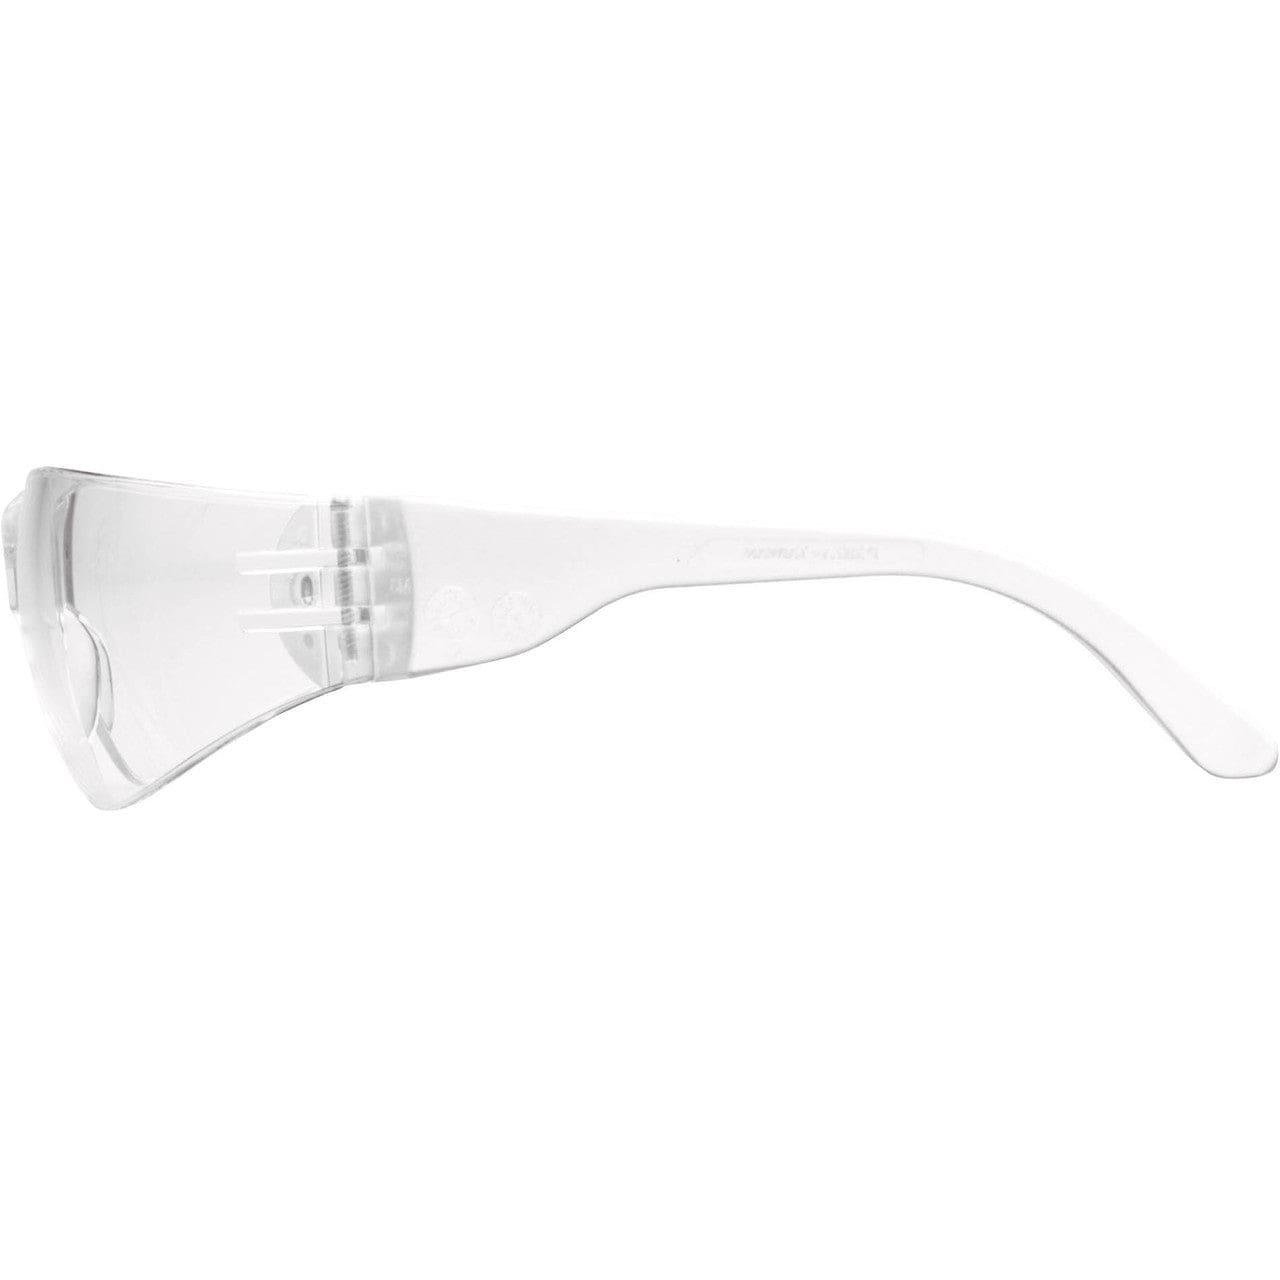 Pyramex S4110ST Intruder Safety Glasses Side View